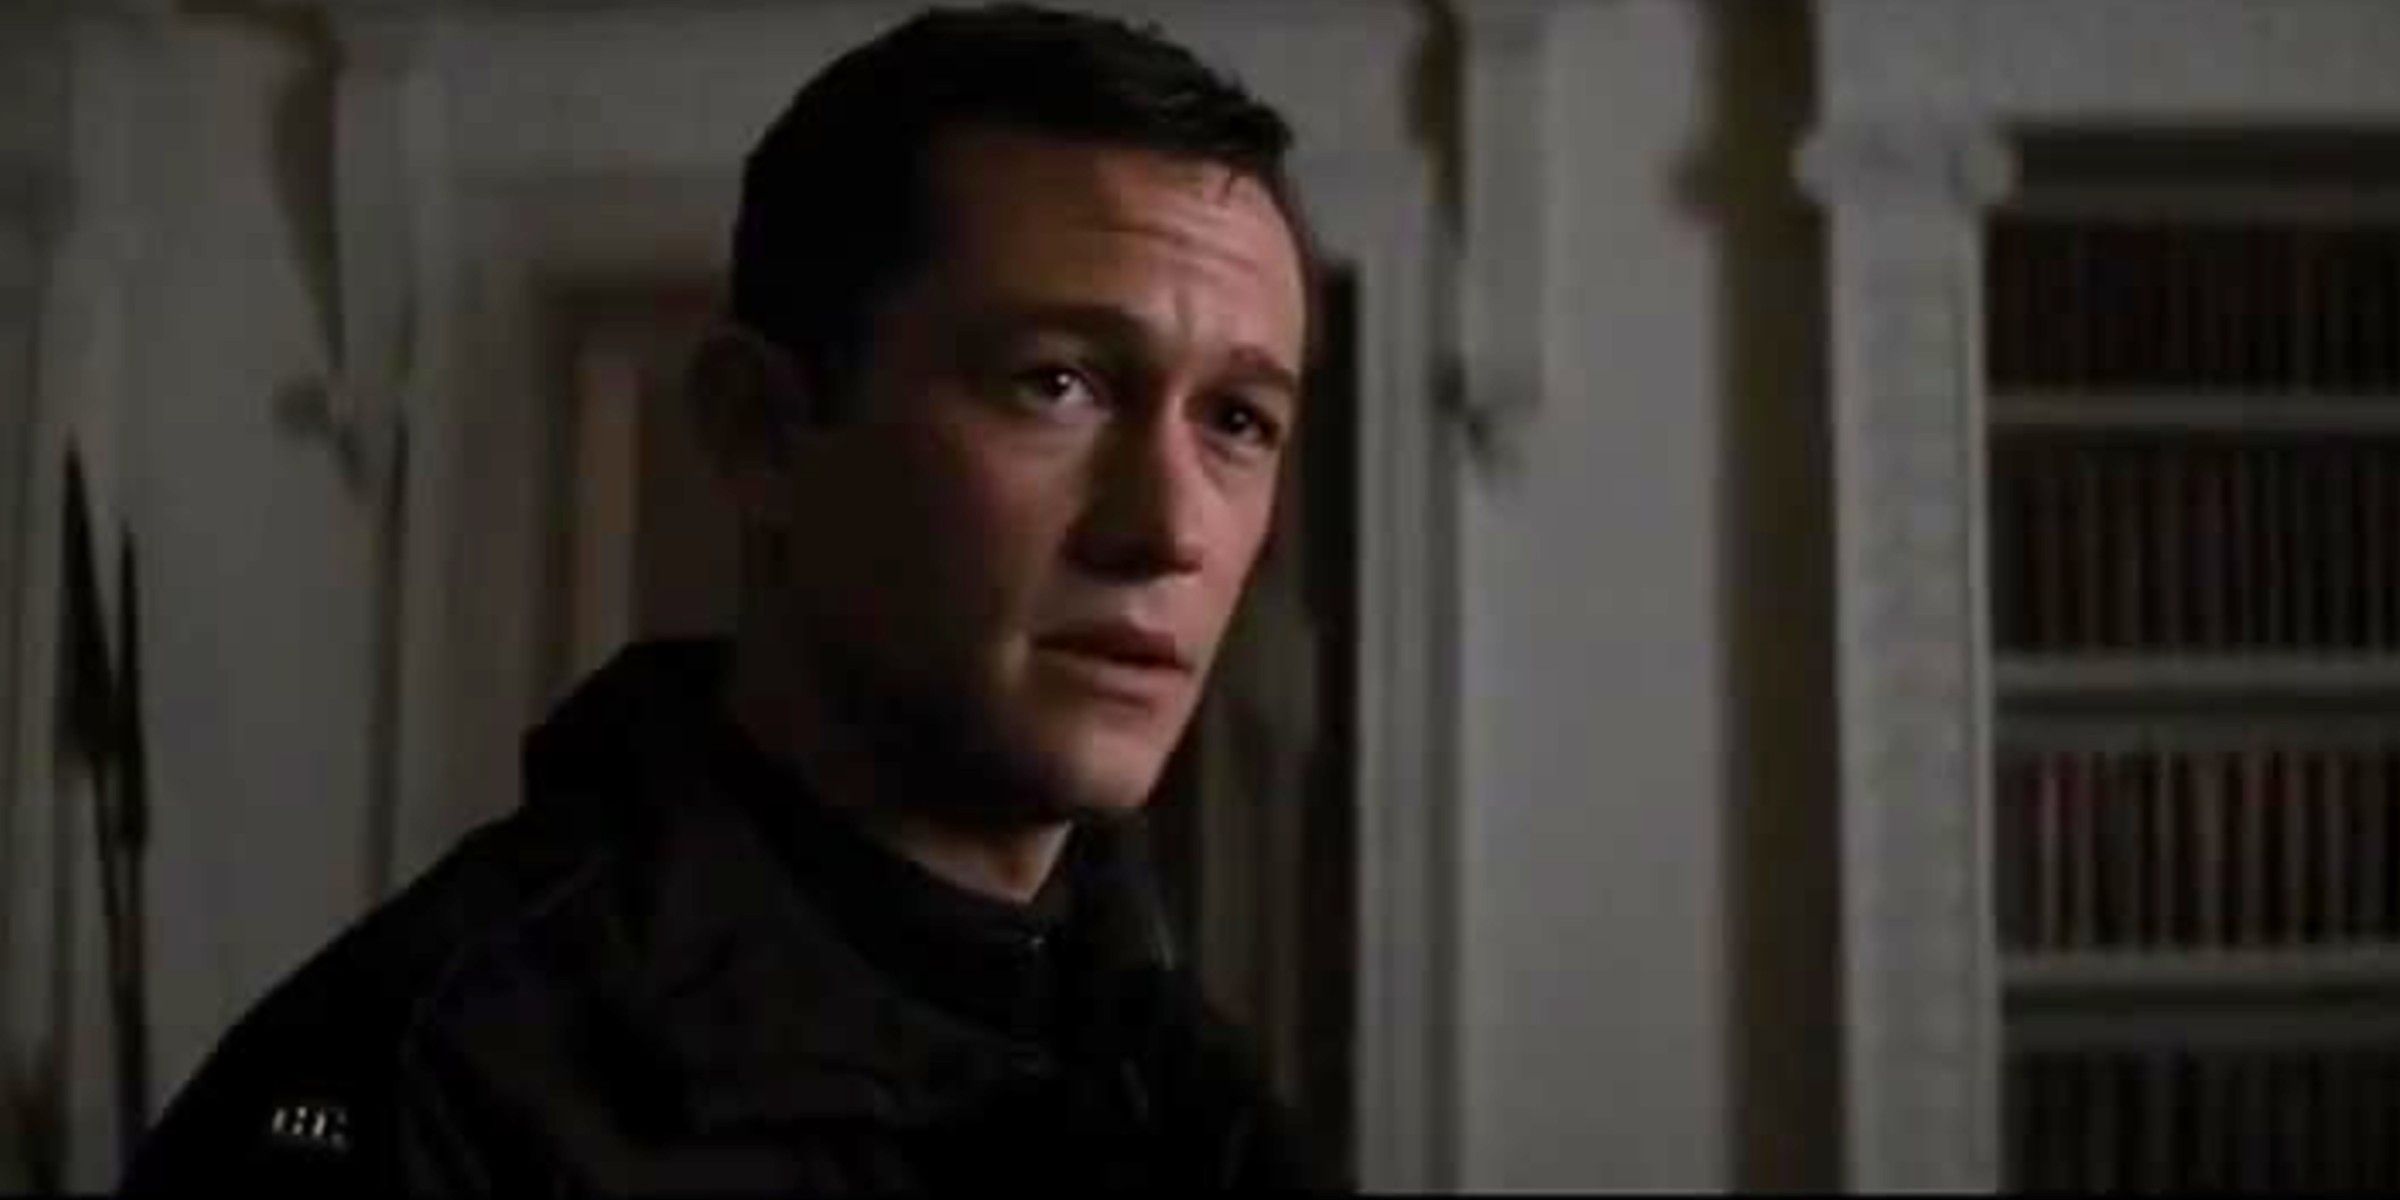 Joseph Gordon-Levitt as John Blake in The Dark Knight Rises